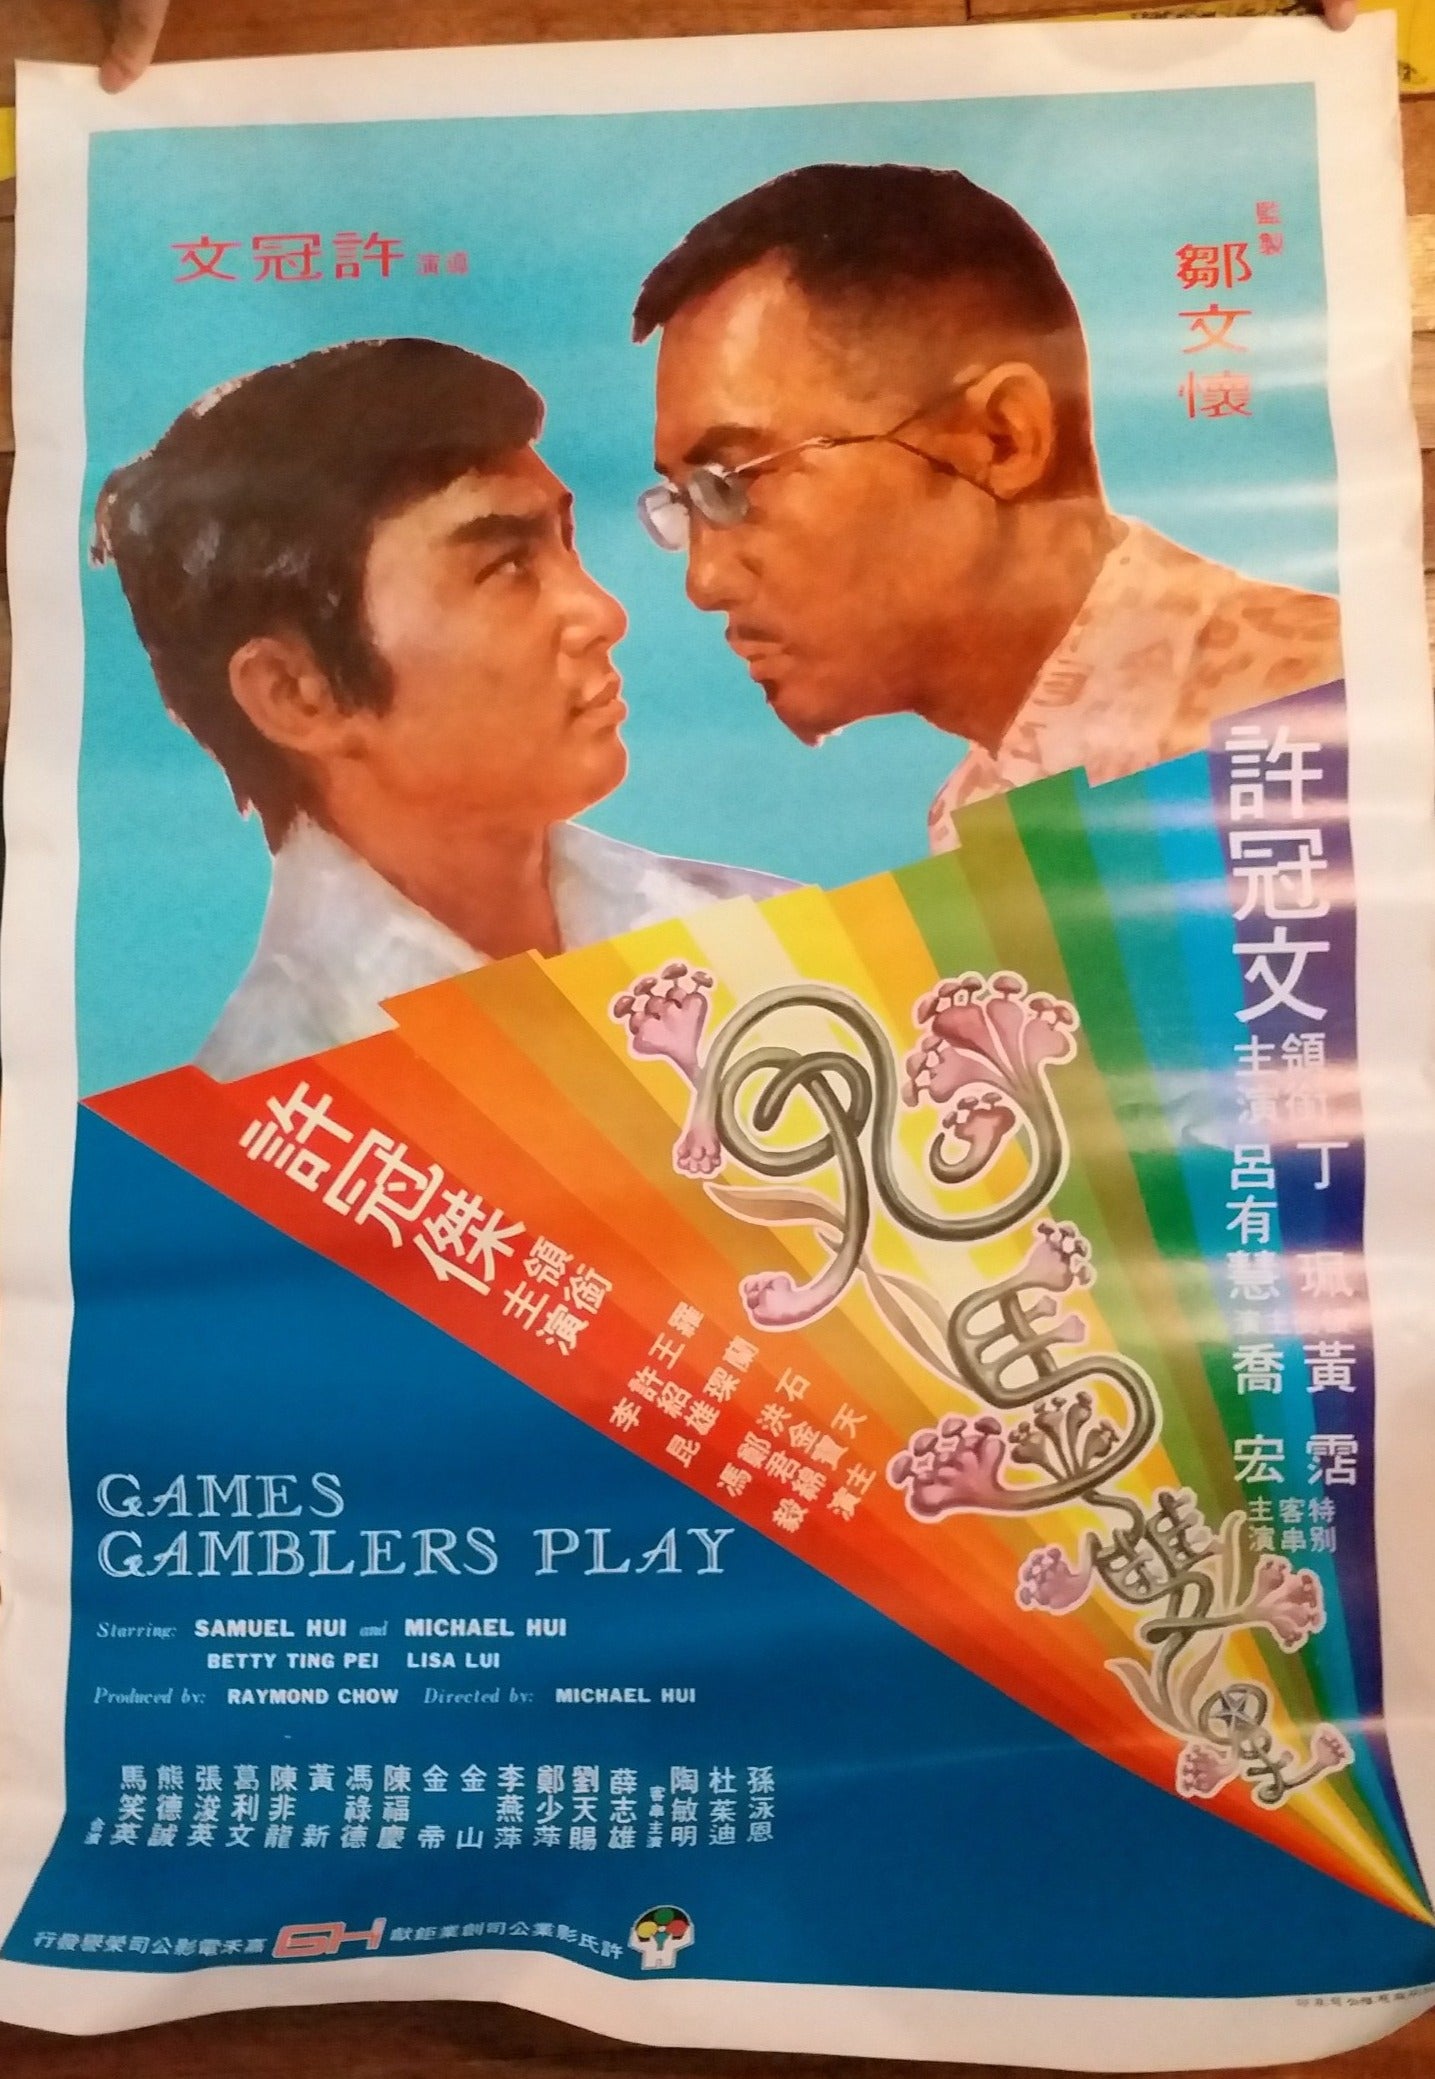 'Games Gamblers Play' Vintage Movie Poster - A